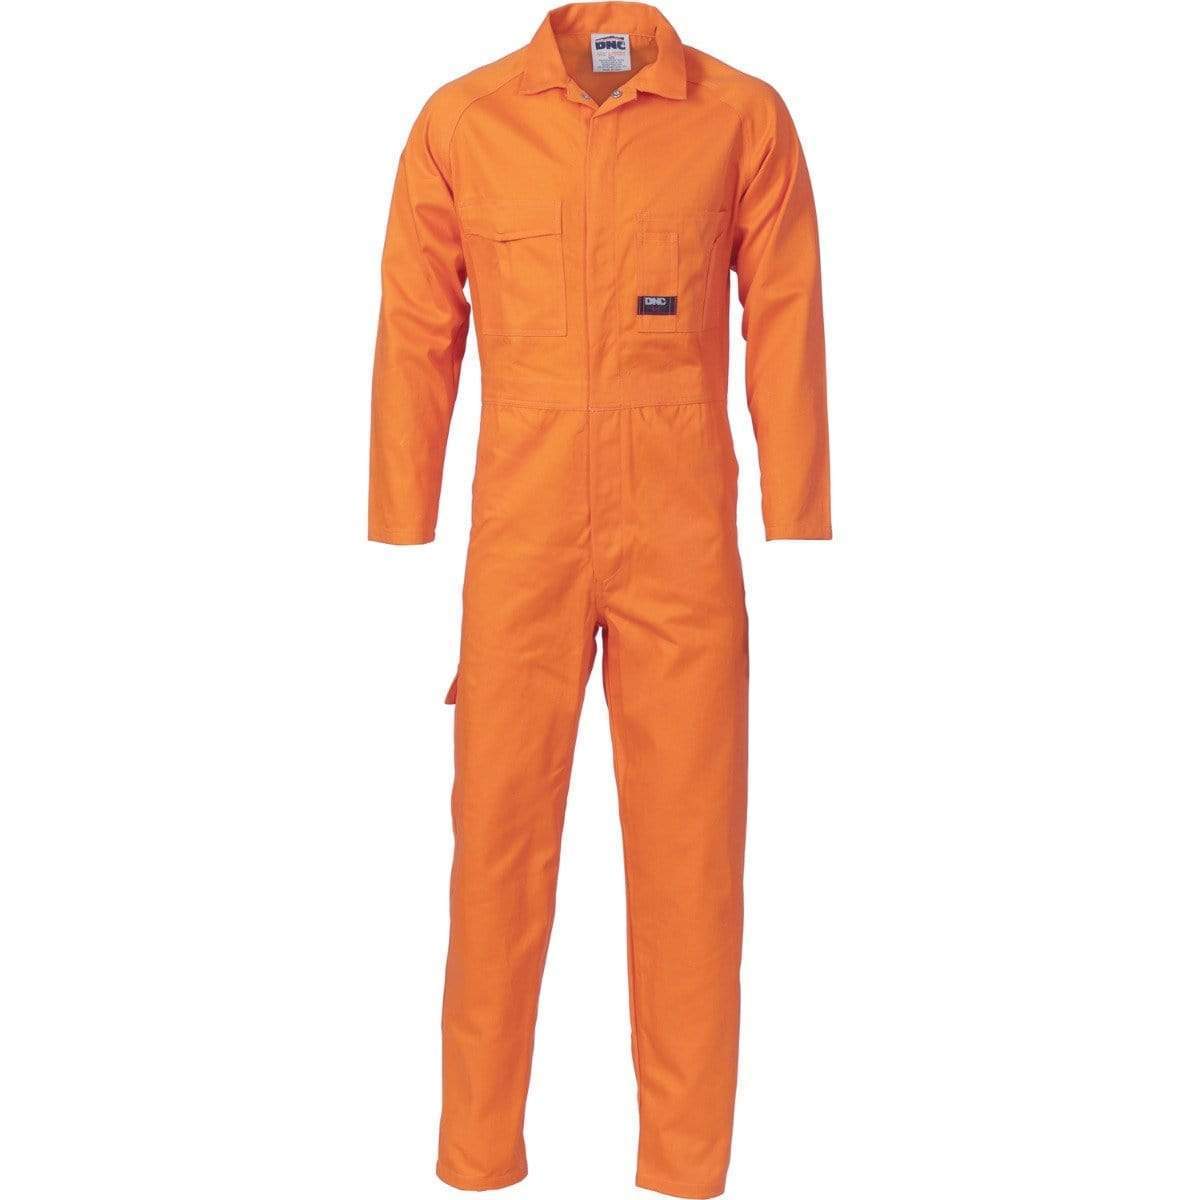 Dnc Workwear Cotton Drill Coverall - 3101 Work Wear DNC Workwear Orange 77R 